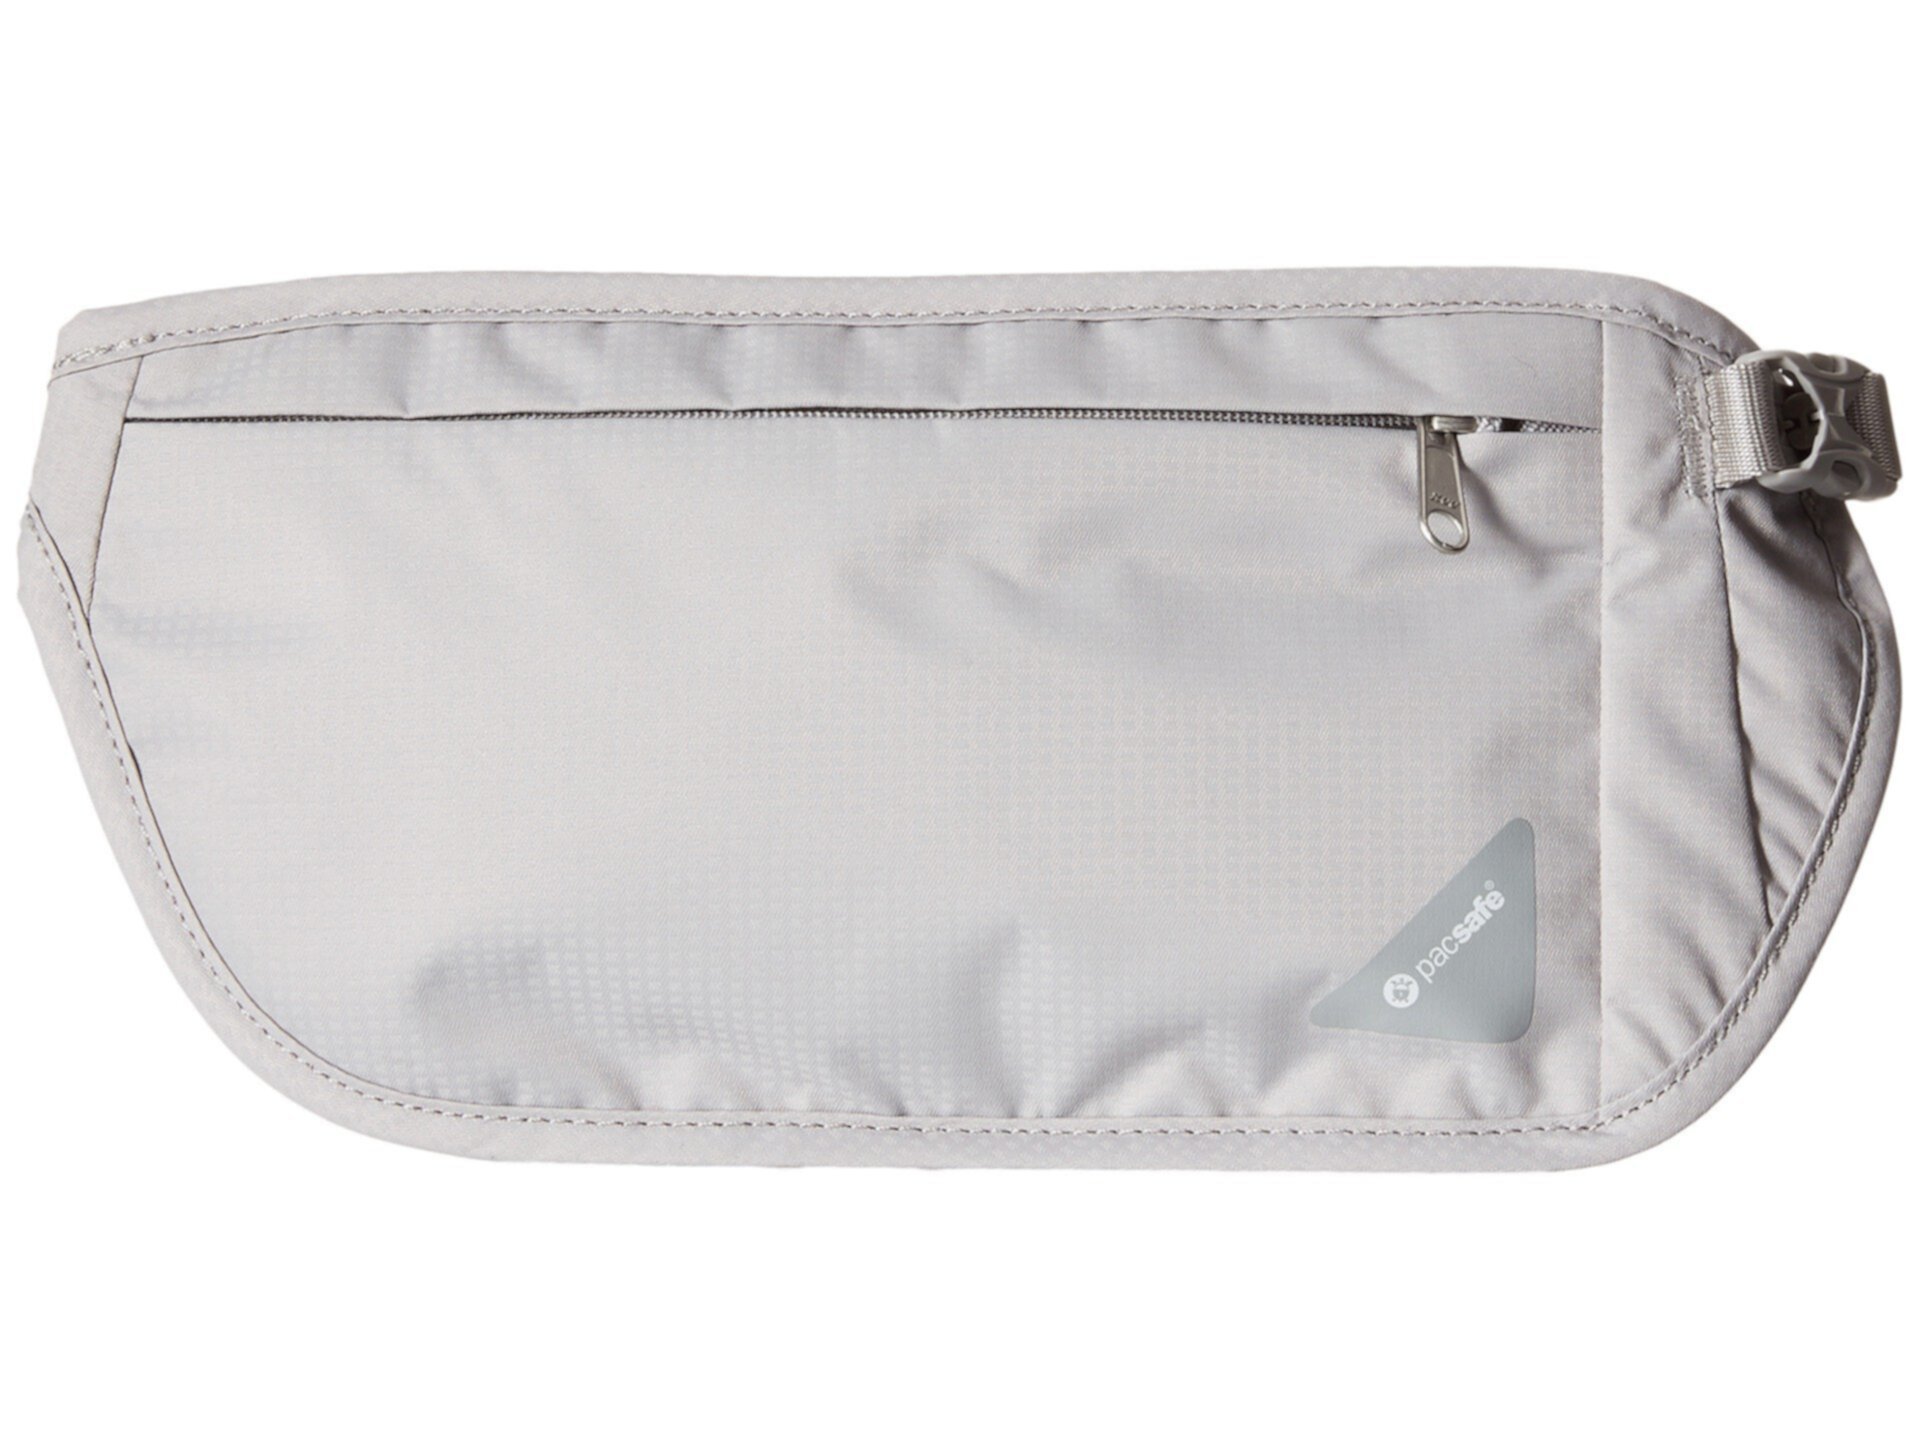 Coversafe V100 RFID Кошелек для талии Pacsafe